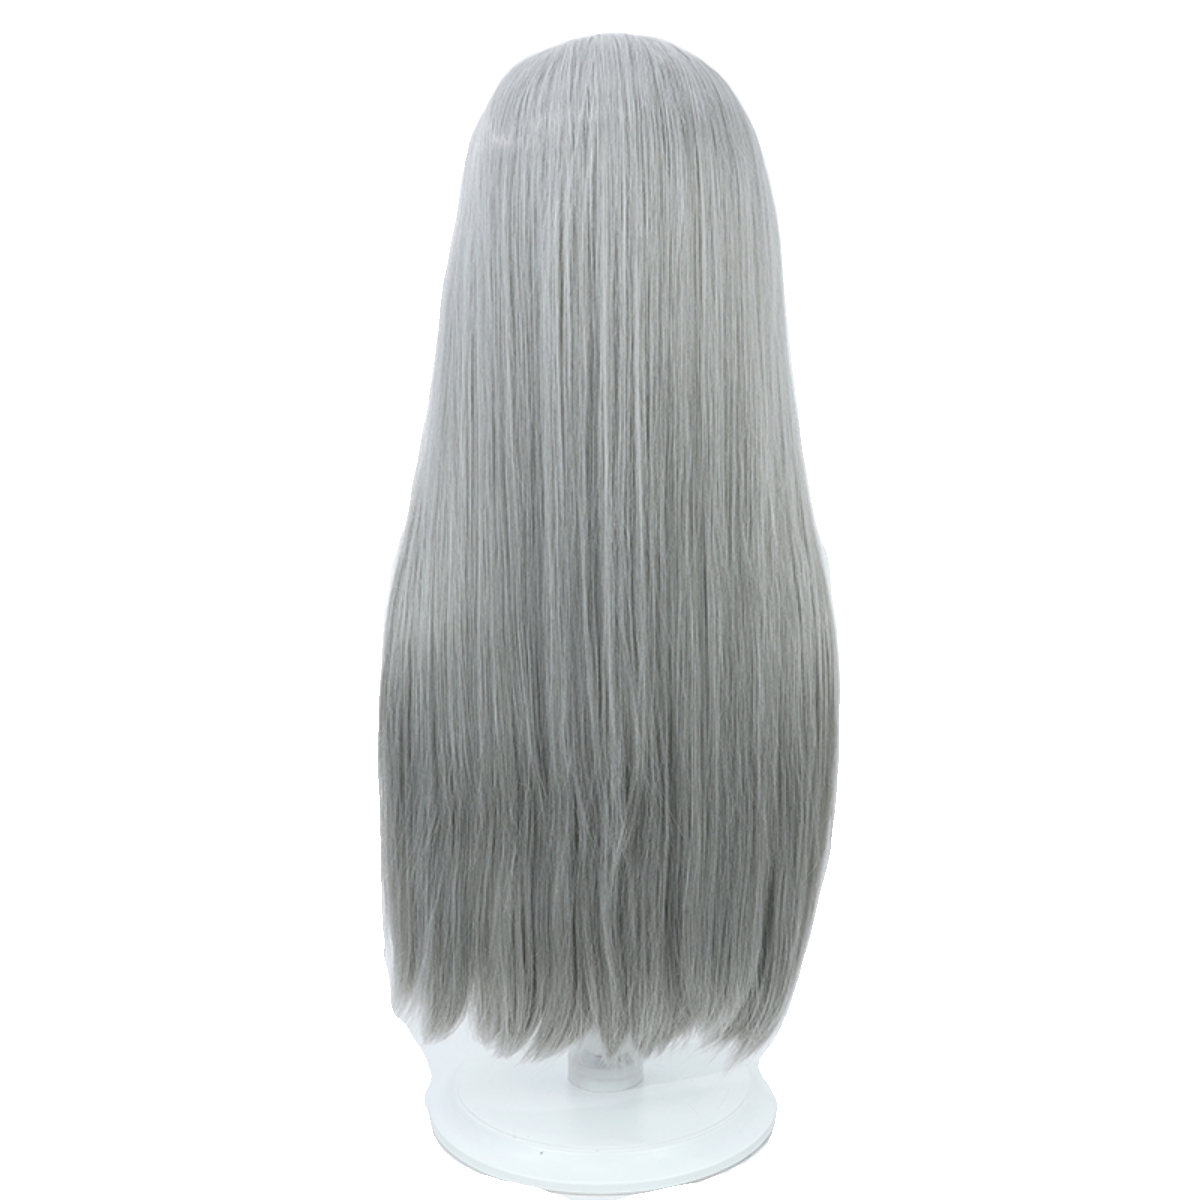 Goddess of Victory: Nikke Modernia Cosplay Wig